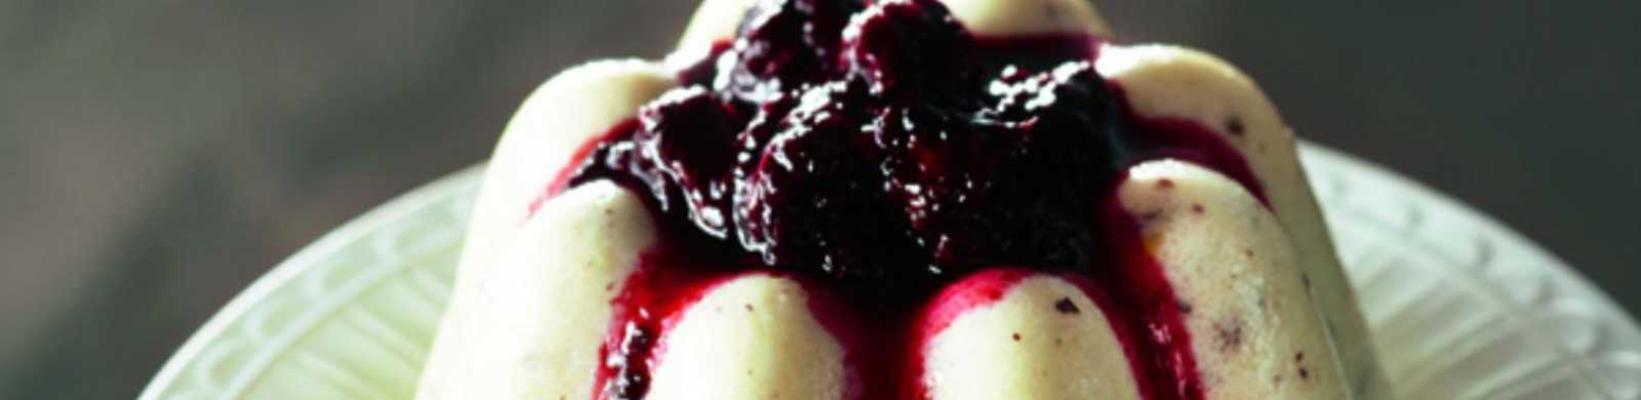 hazelnut semolina pudding with warm blackberry sauce